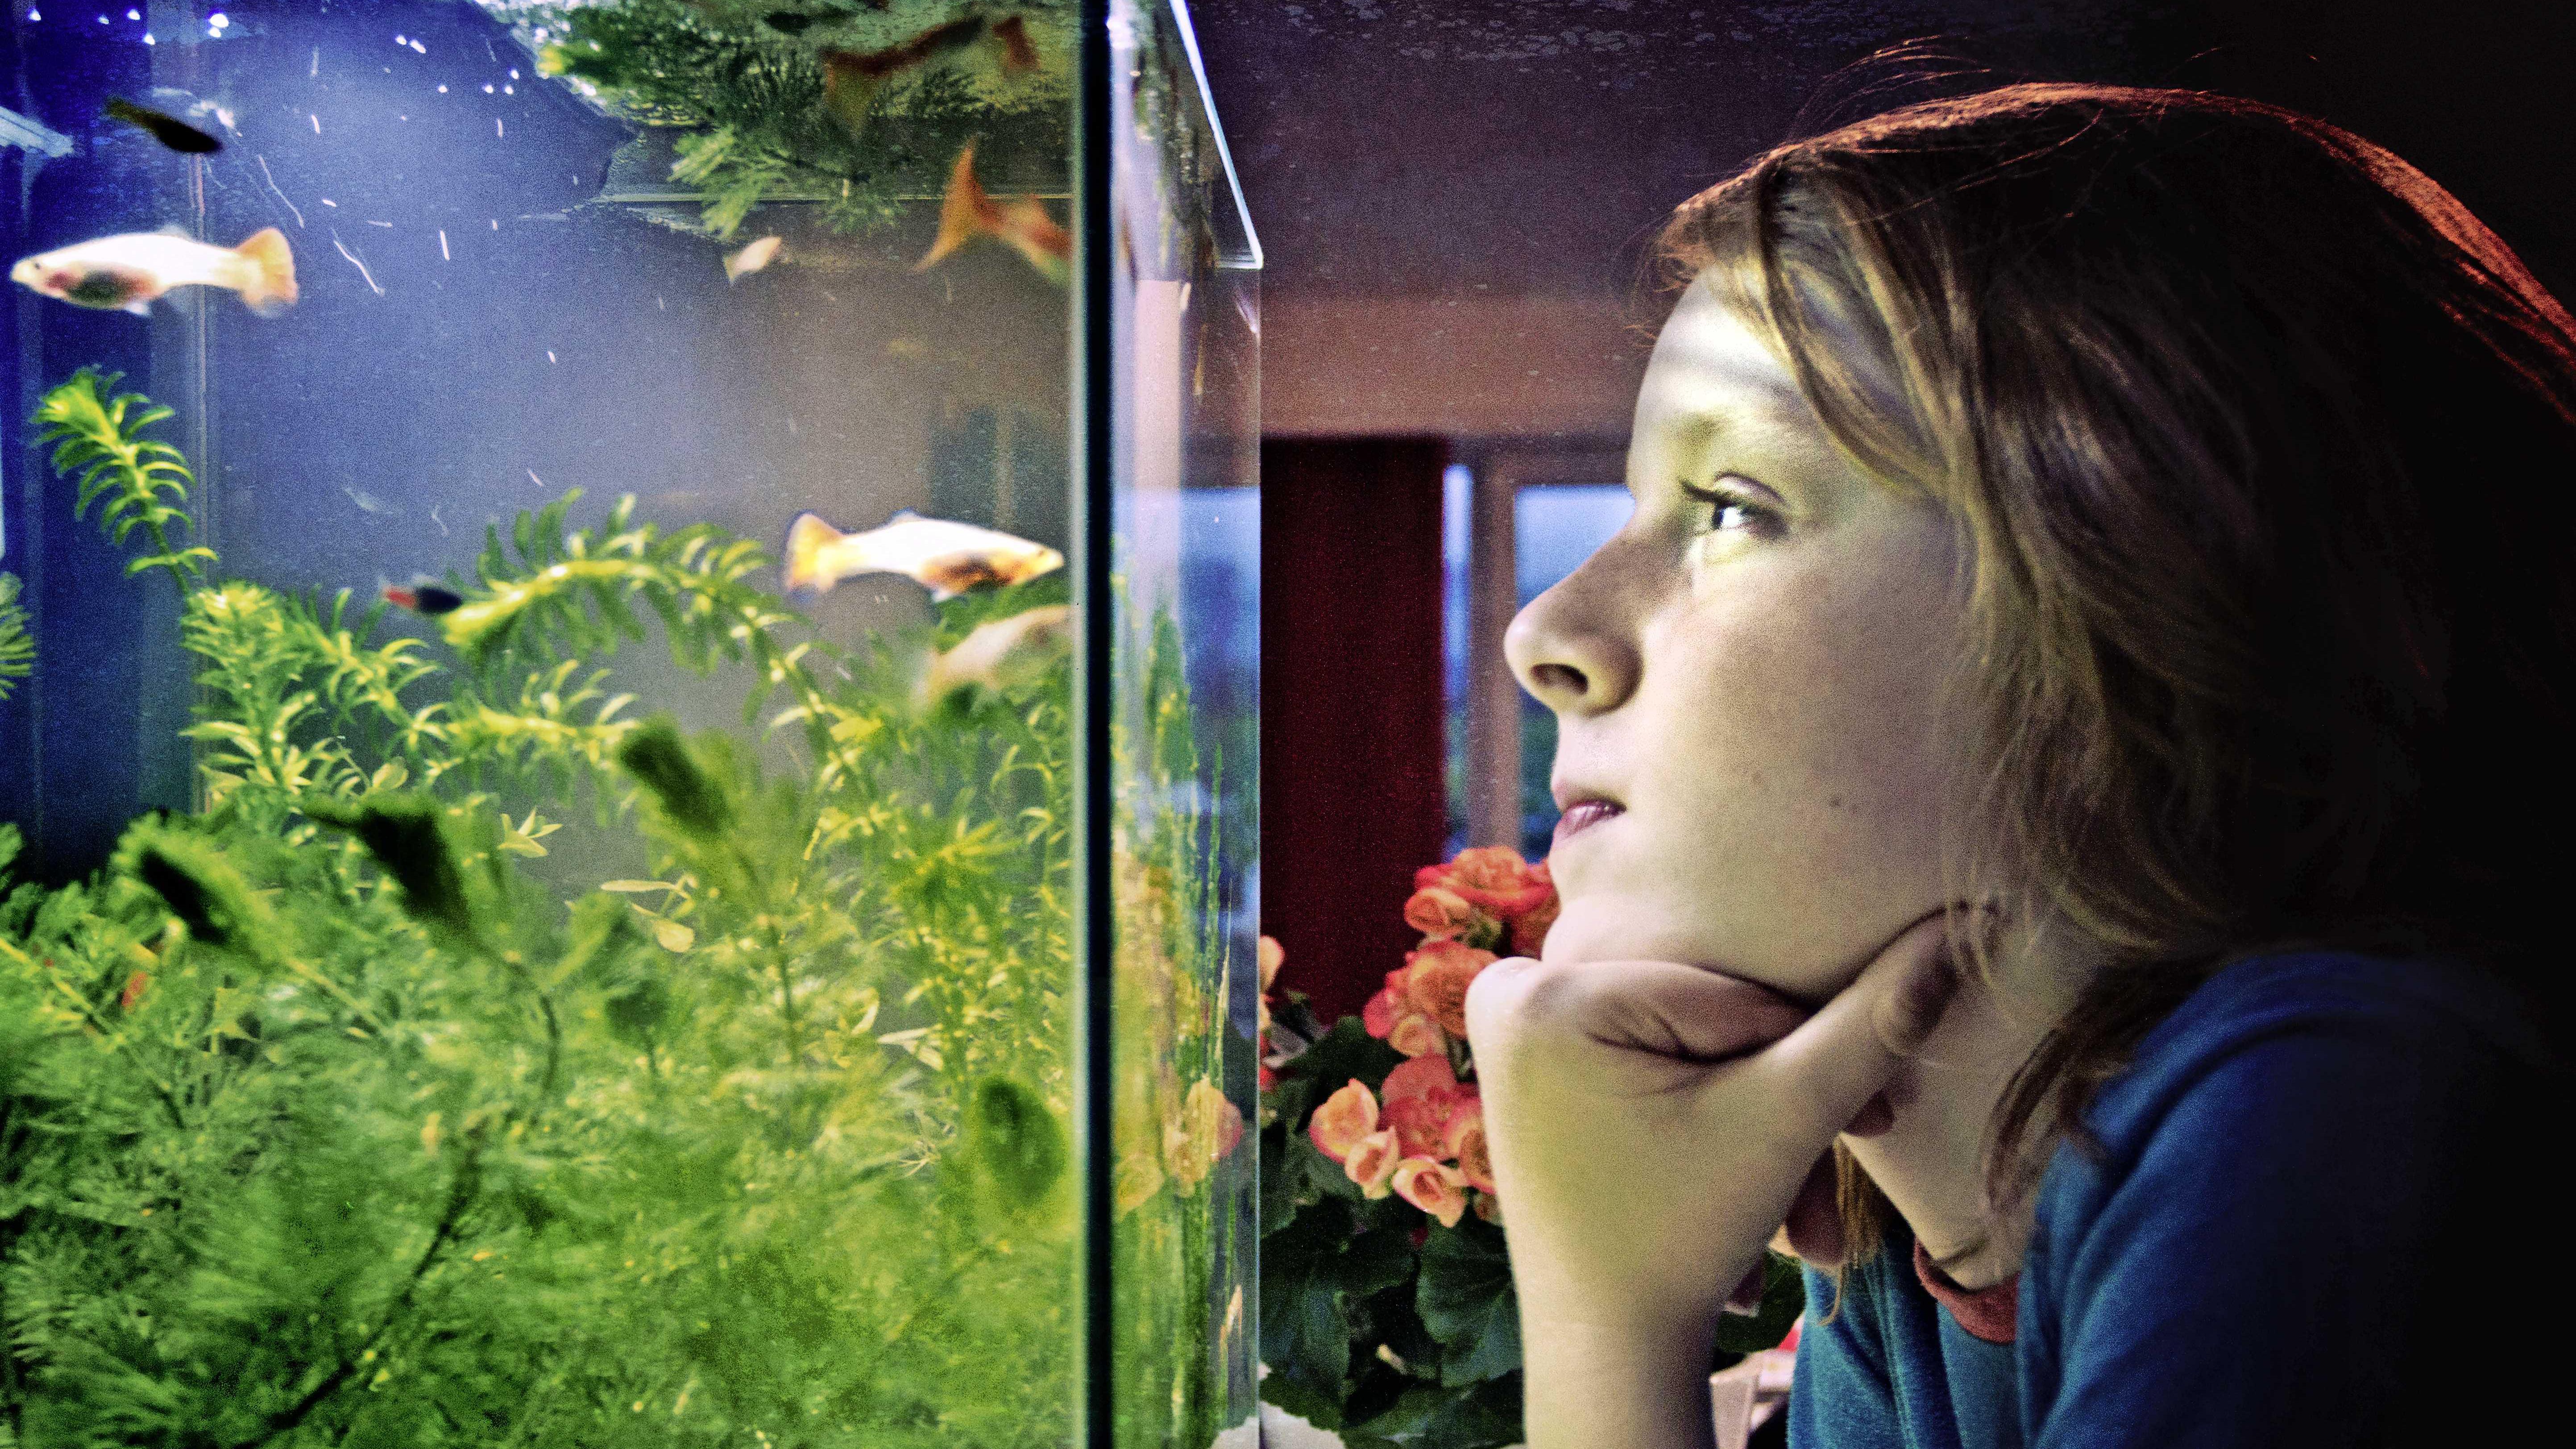 Звуки воды в аквариуме. Аквариум (Fish Tank) 2009. Человек в аквариуме. Фотосессия с рыбкой в аквариуме. Девушка в аквариуме.